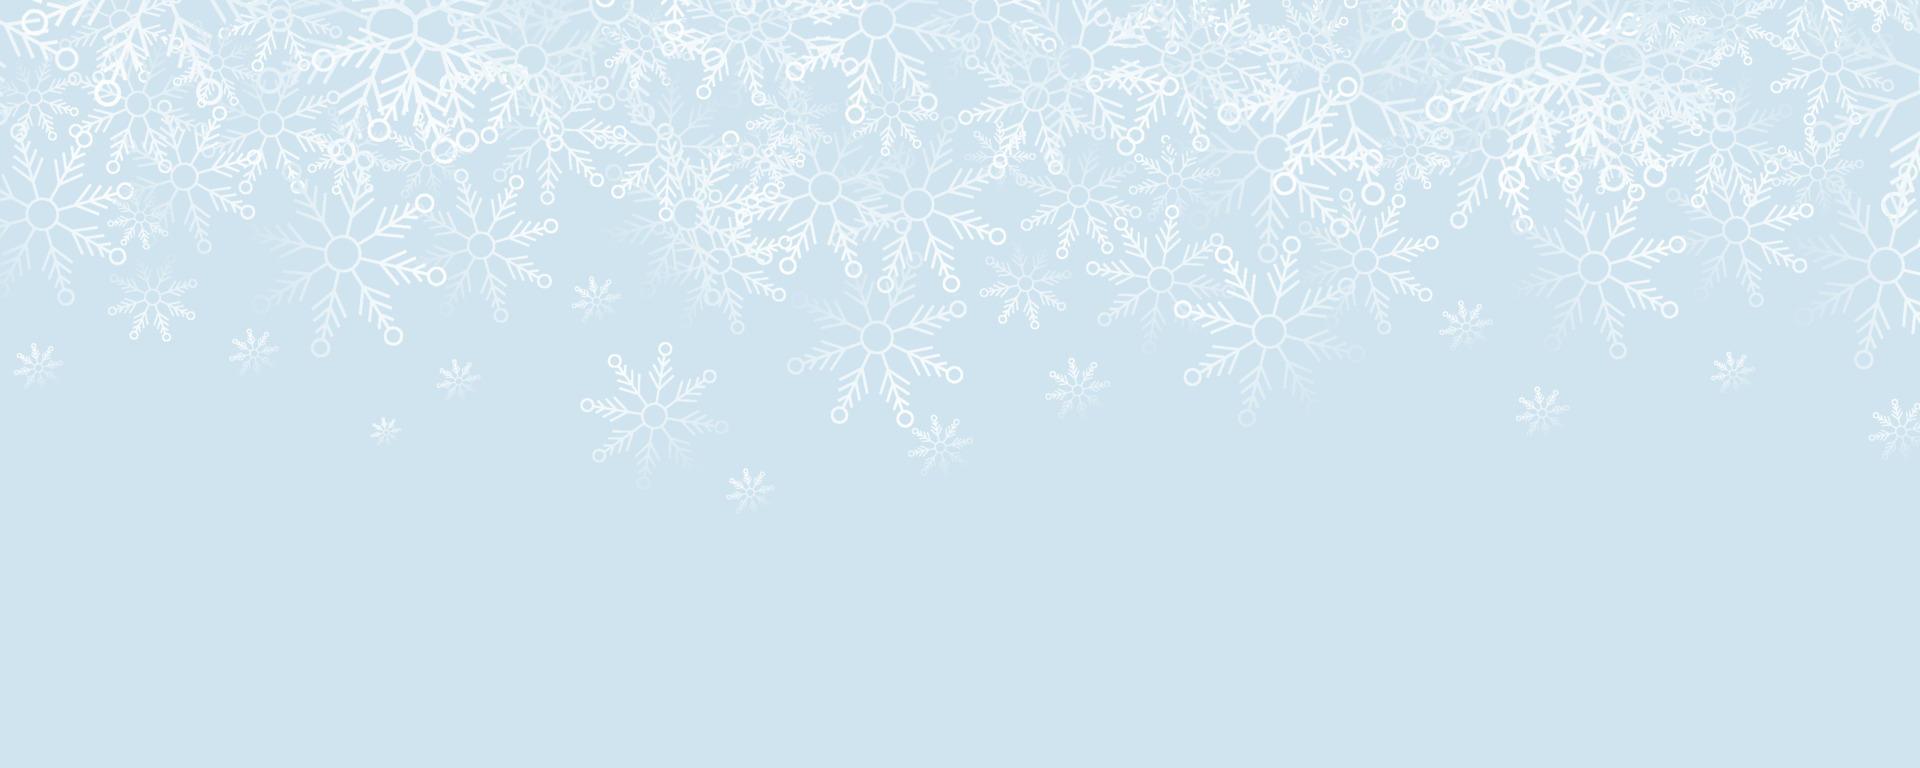 diseño de banner navideño con adorno de copo de nieve vector